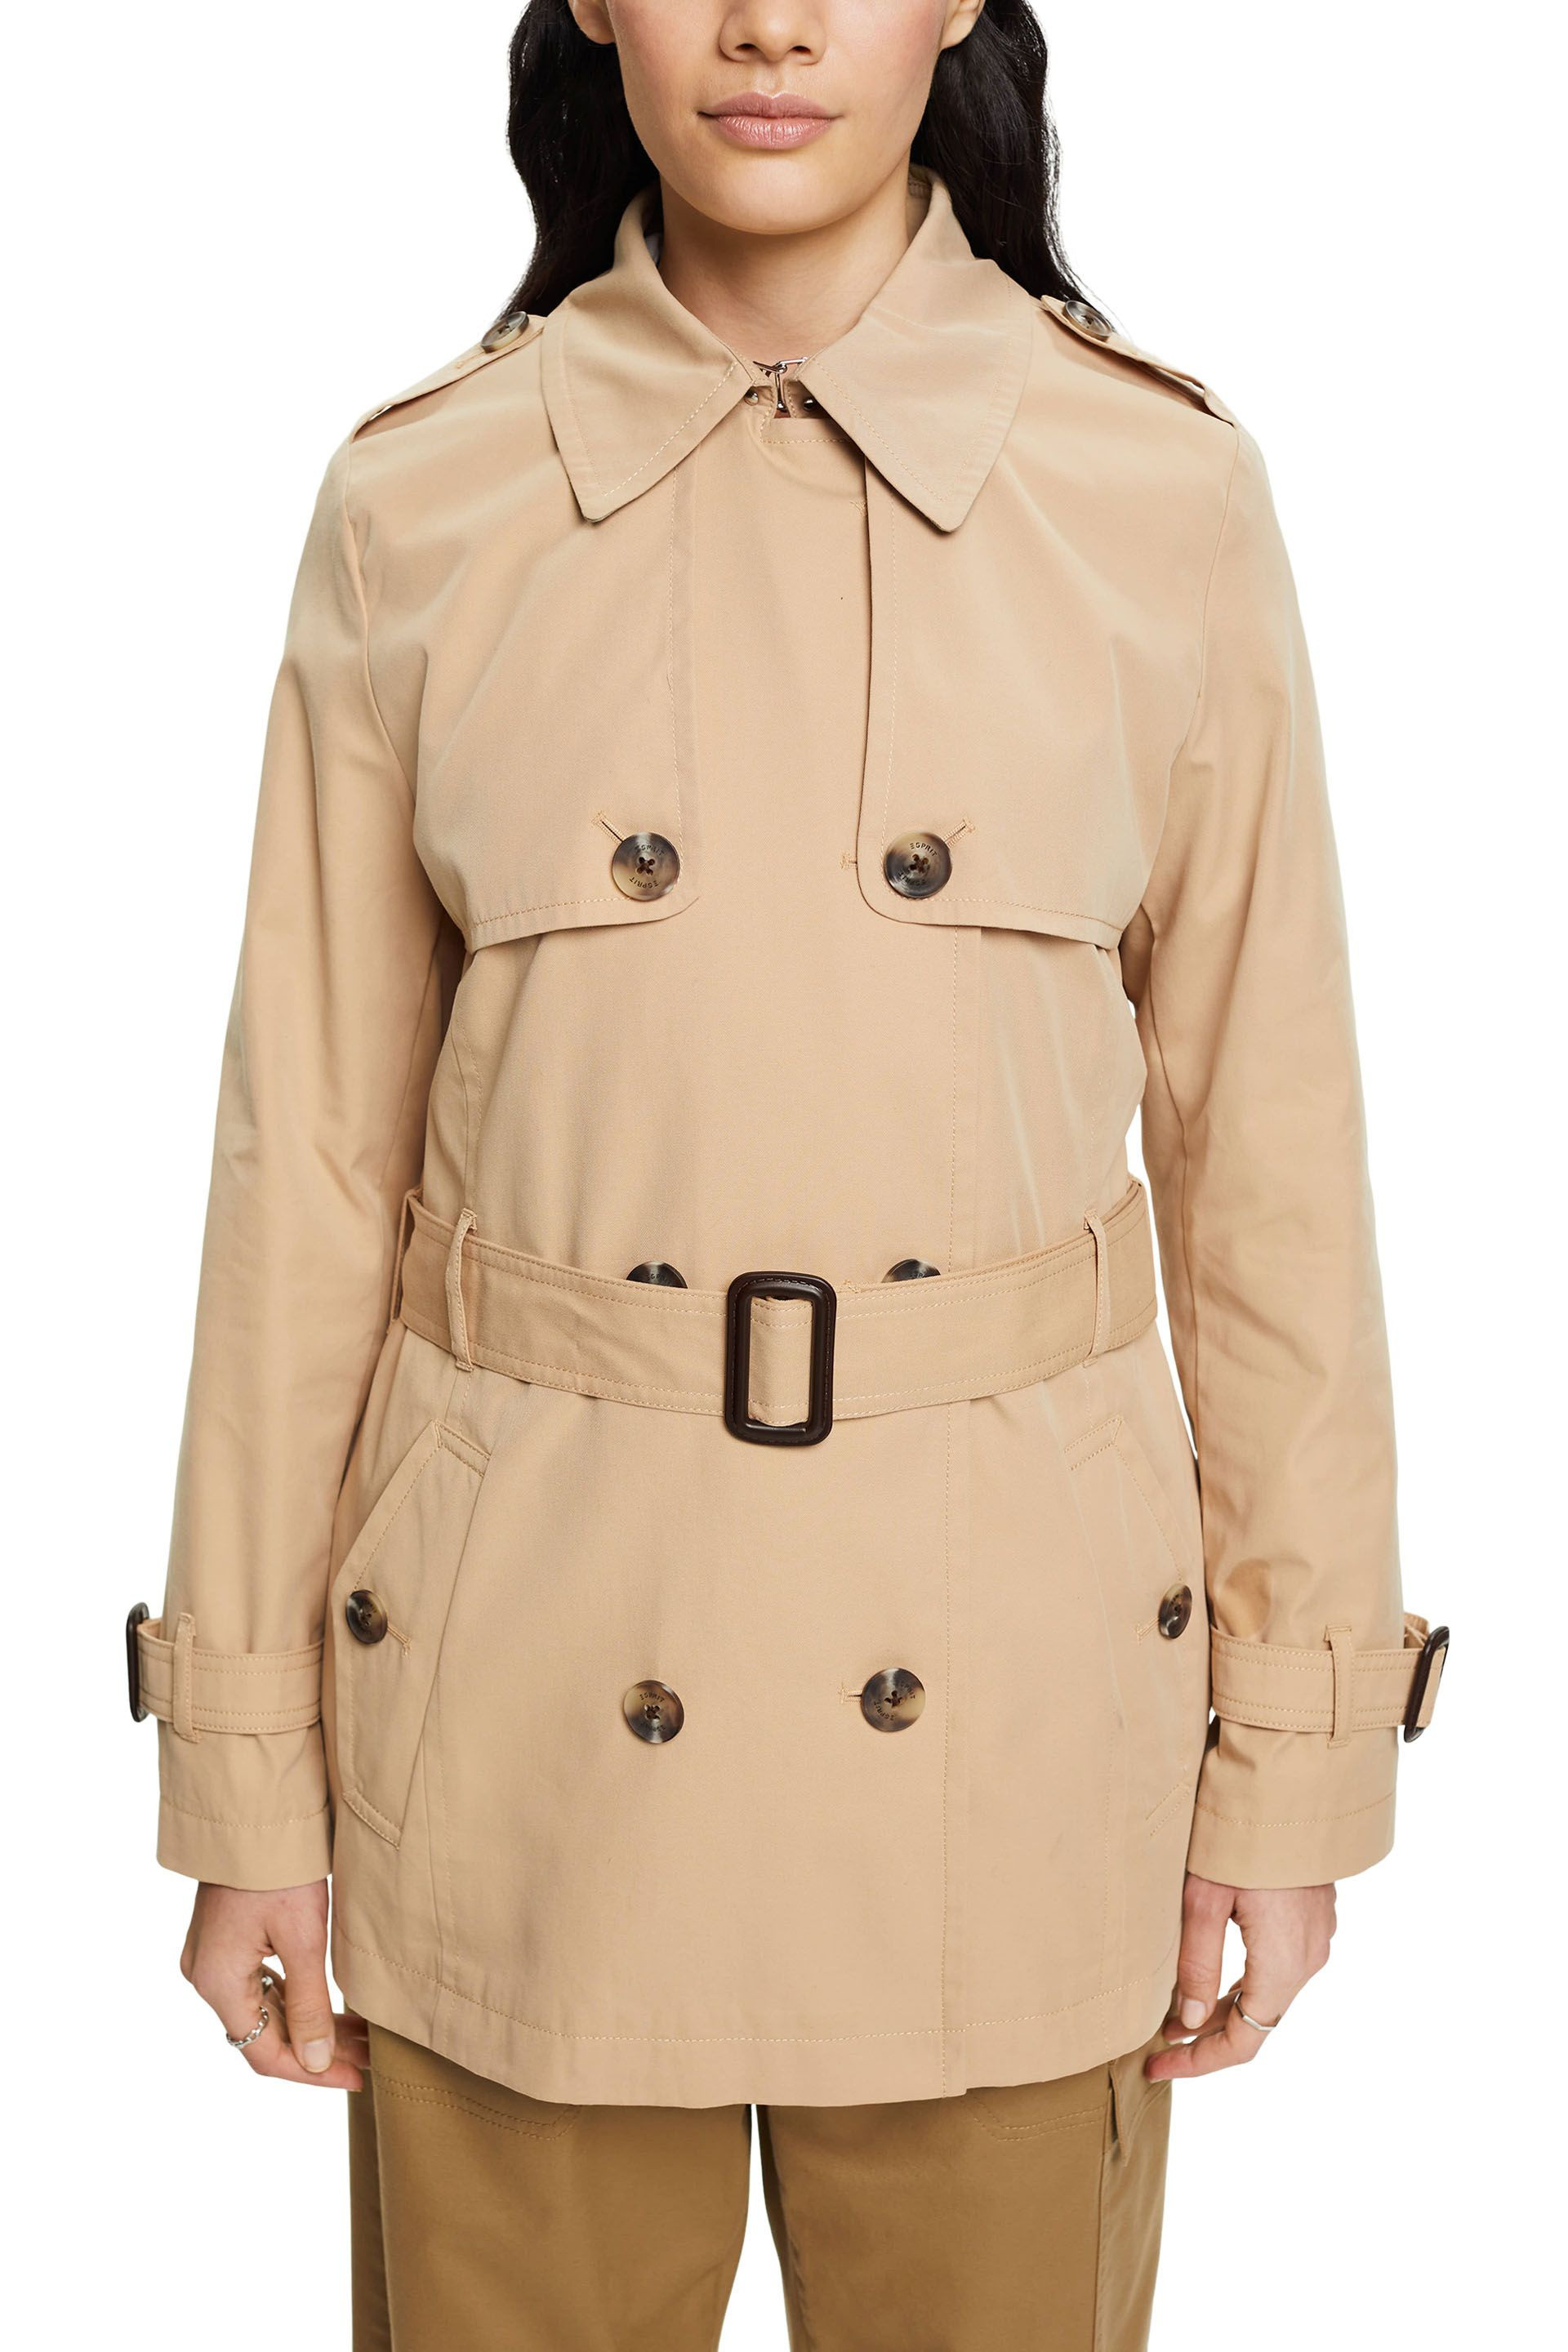 Esprit - Short trench coat with belt, Sand, large image number 1